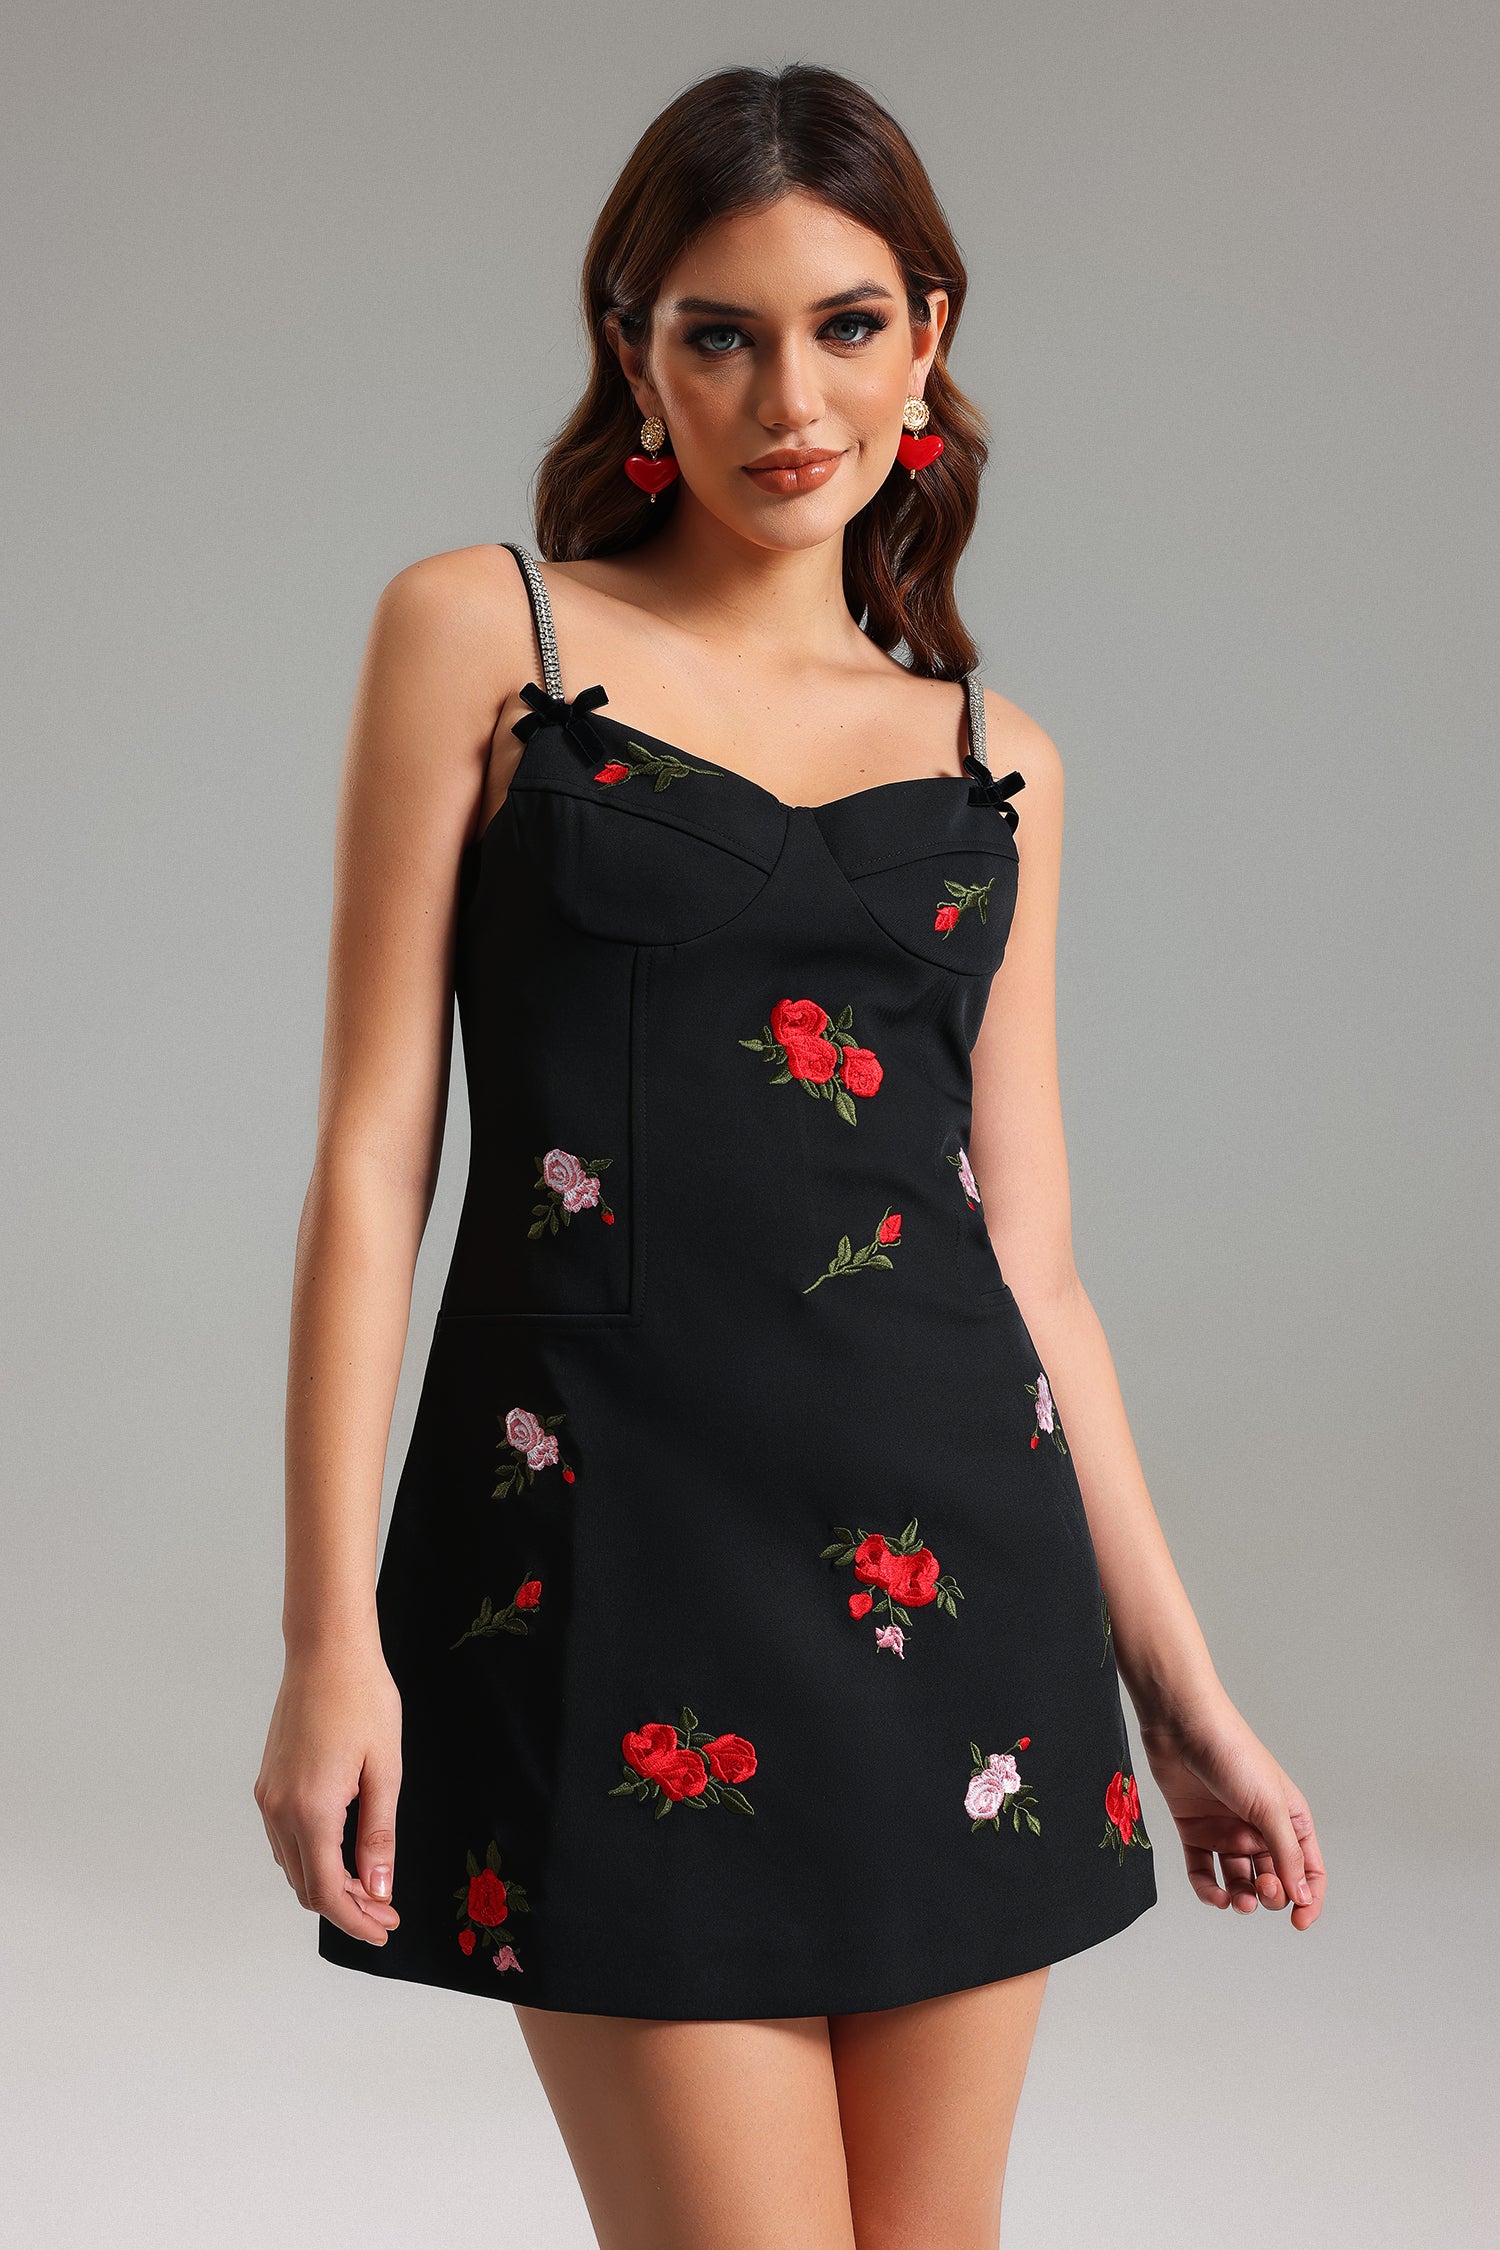 Miriam embroidery Halter Mini Dress